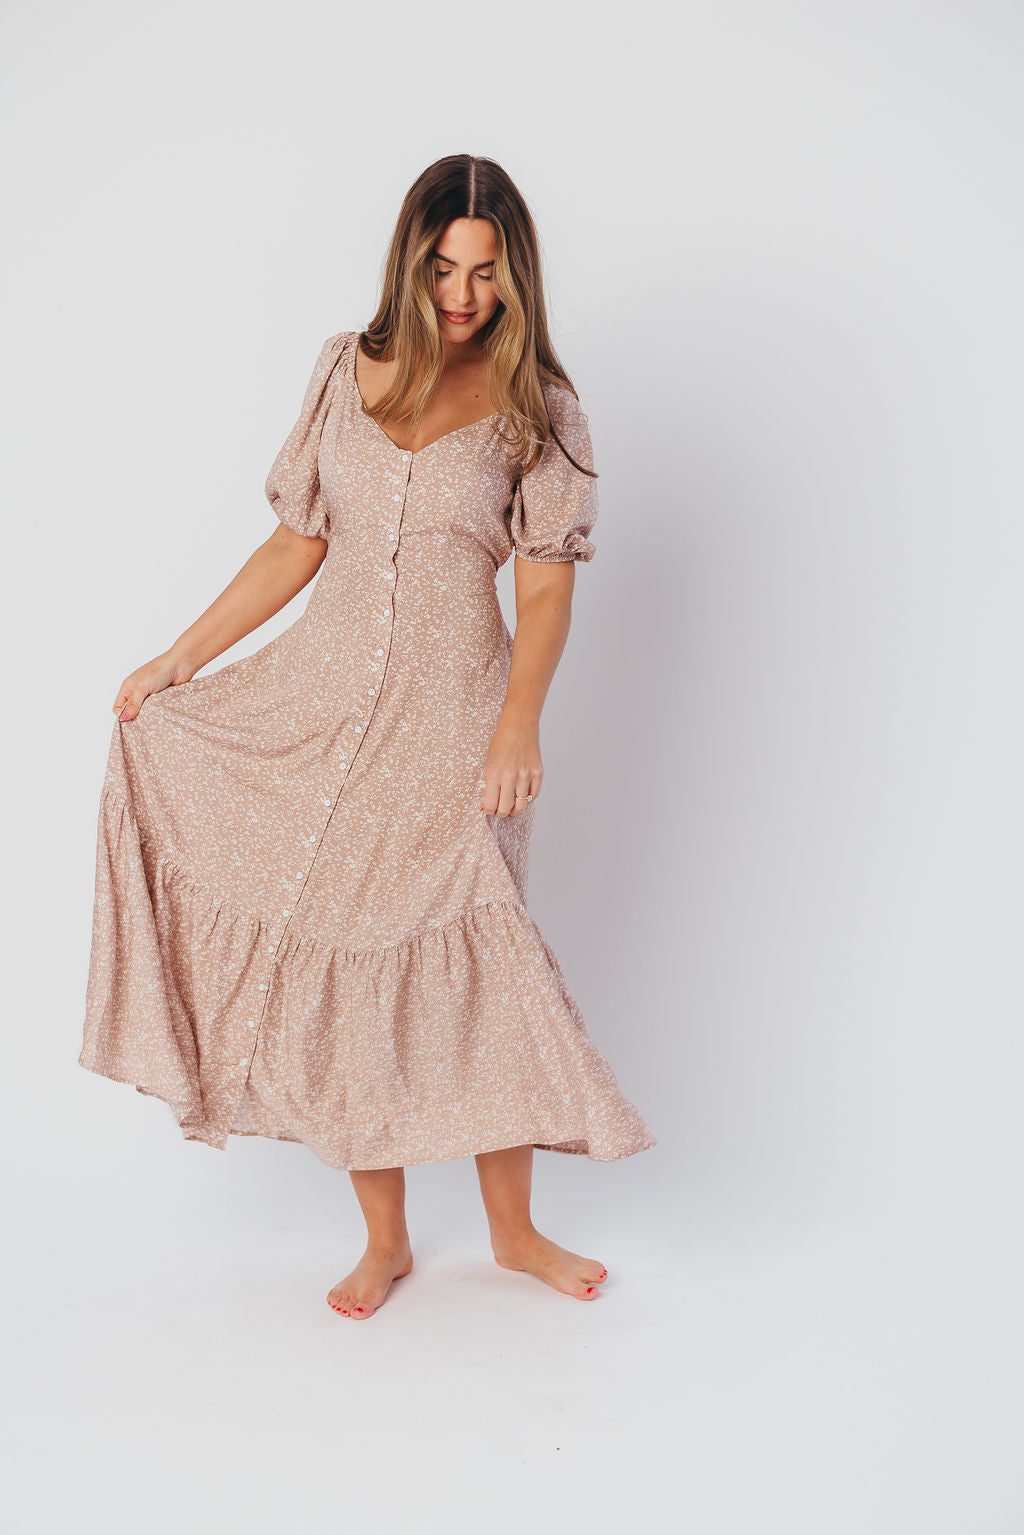 Ellington Button-Down Midi Dress with Sweetheart Neckline in Beige Floral - Nursing Friendly